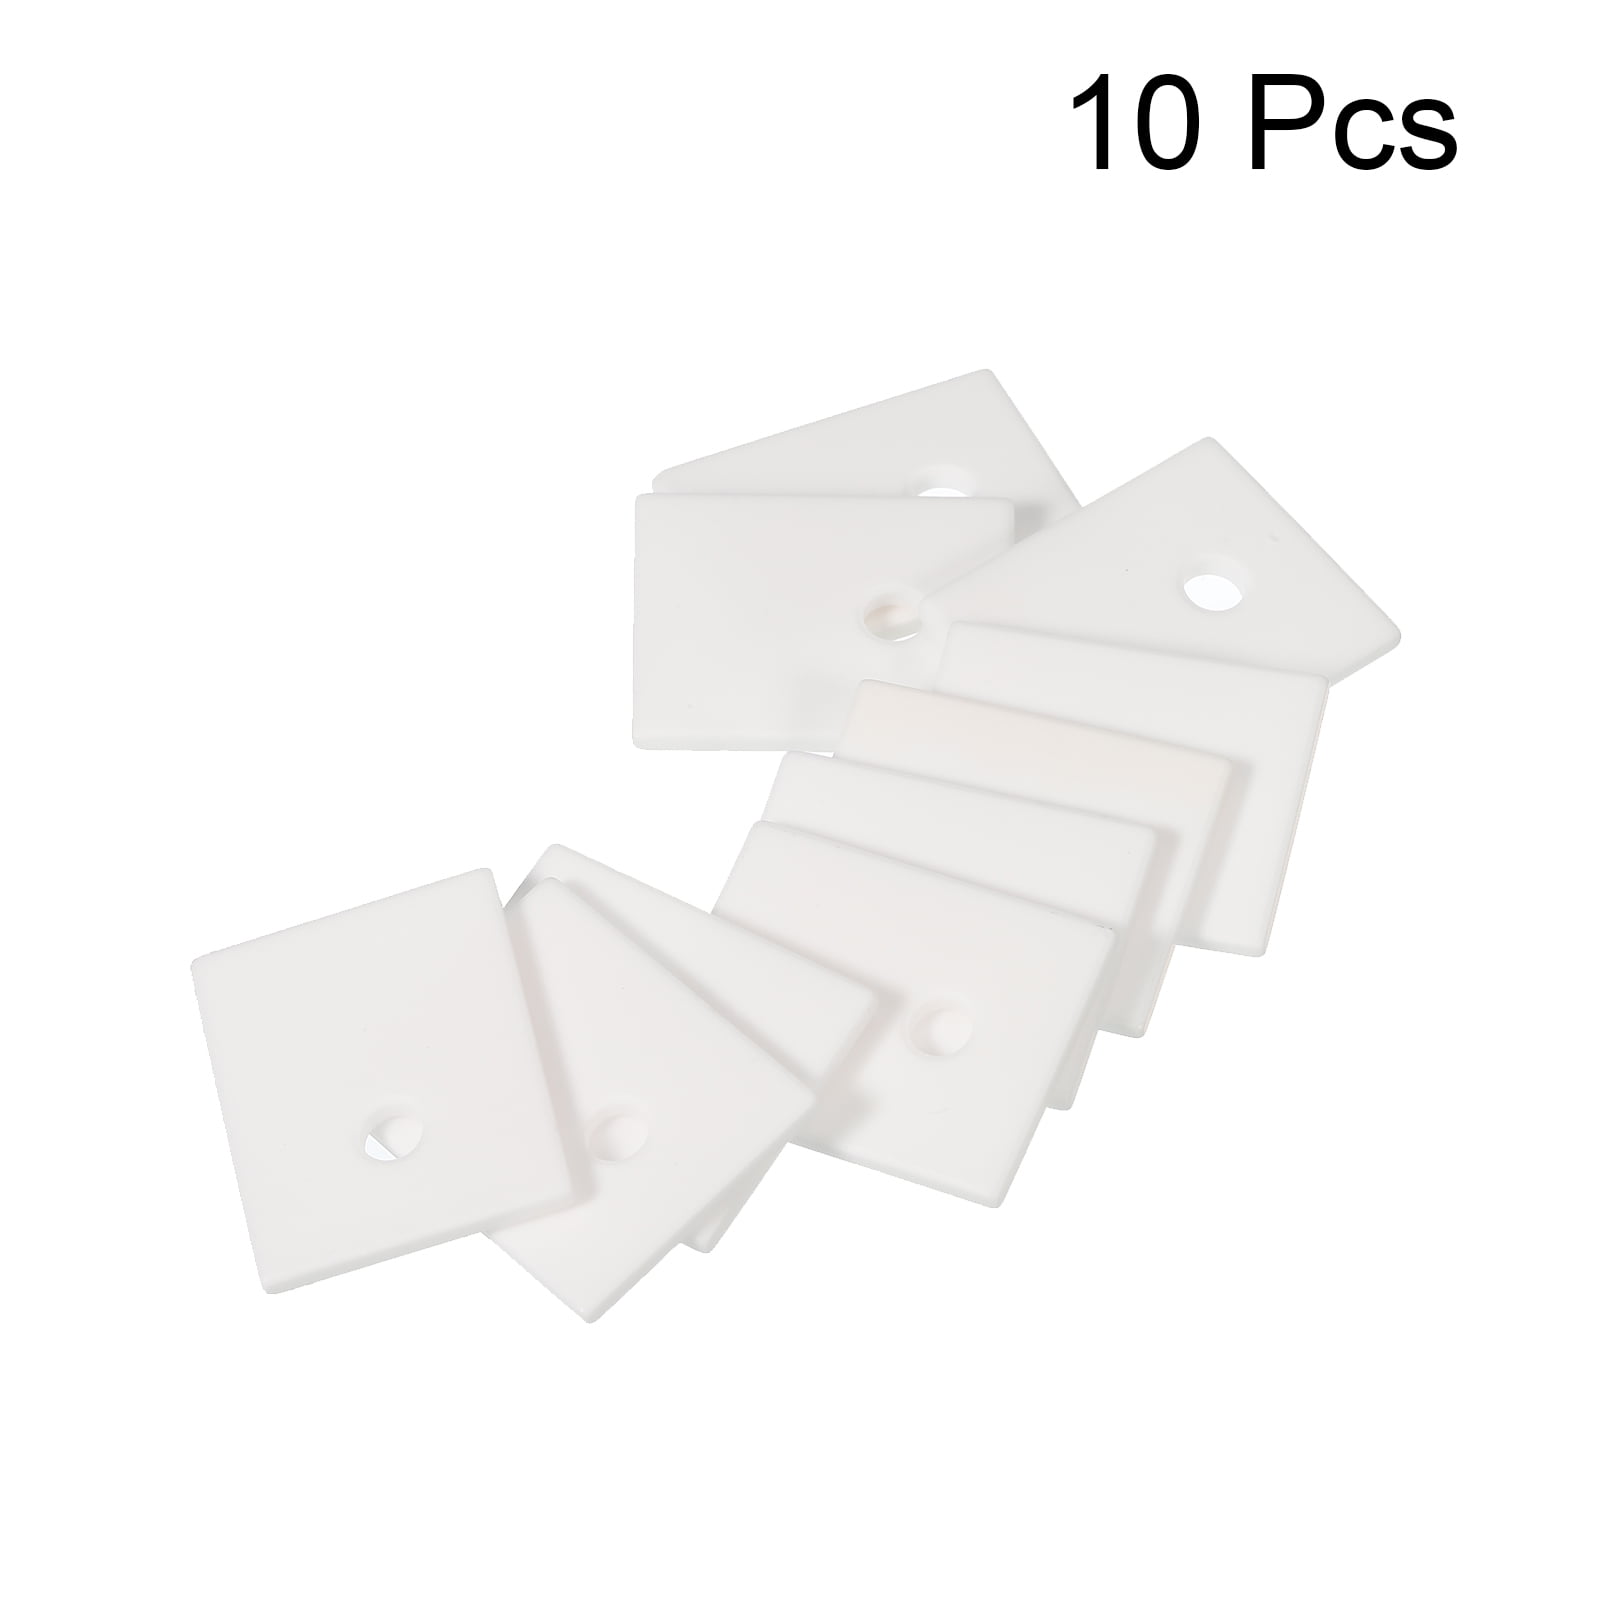 Alumina Ceramic Sheet Cooling Pad Insulating Sheet 10pcs 3.5mm Hole for MOS Transistor 25x20x2mm(1x0.8x0.08 inch), White